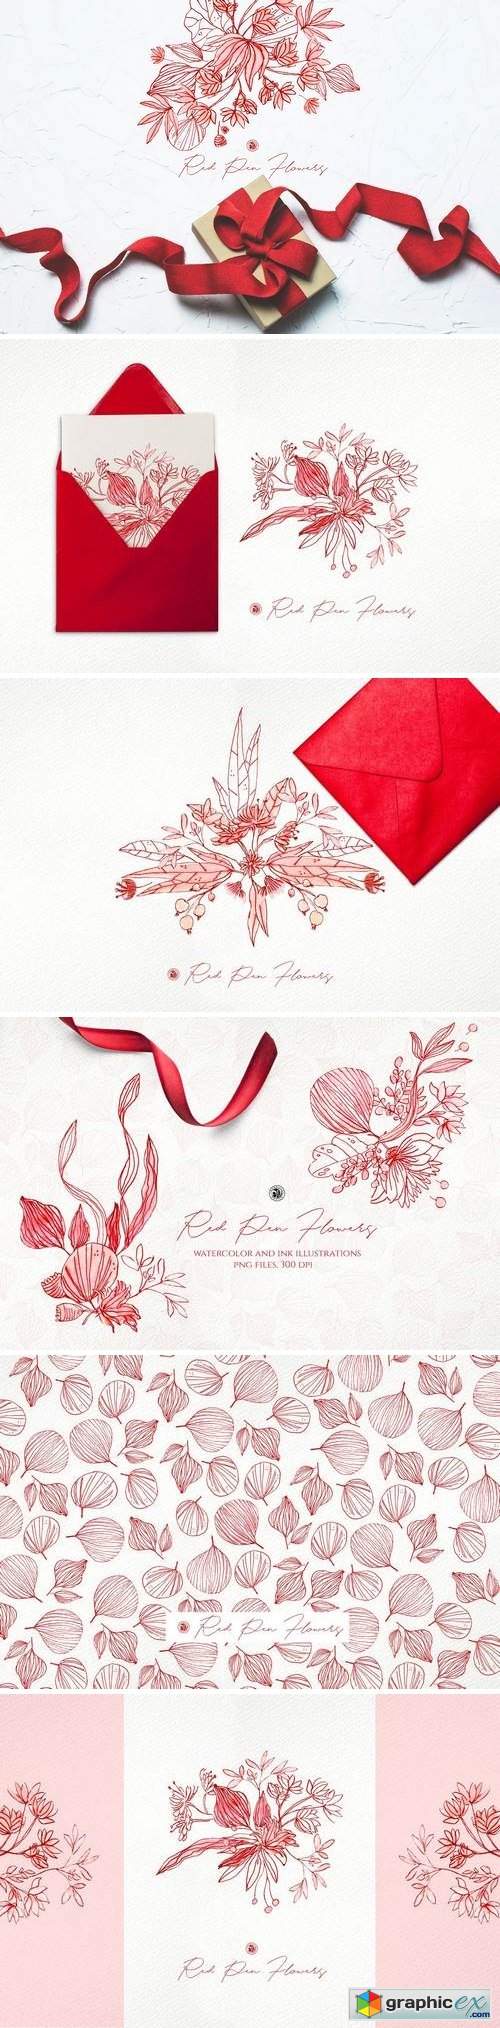 Red Pen Flowers